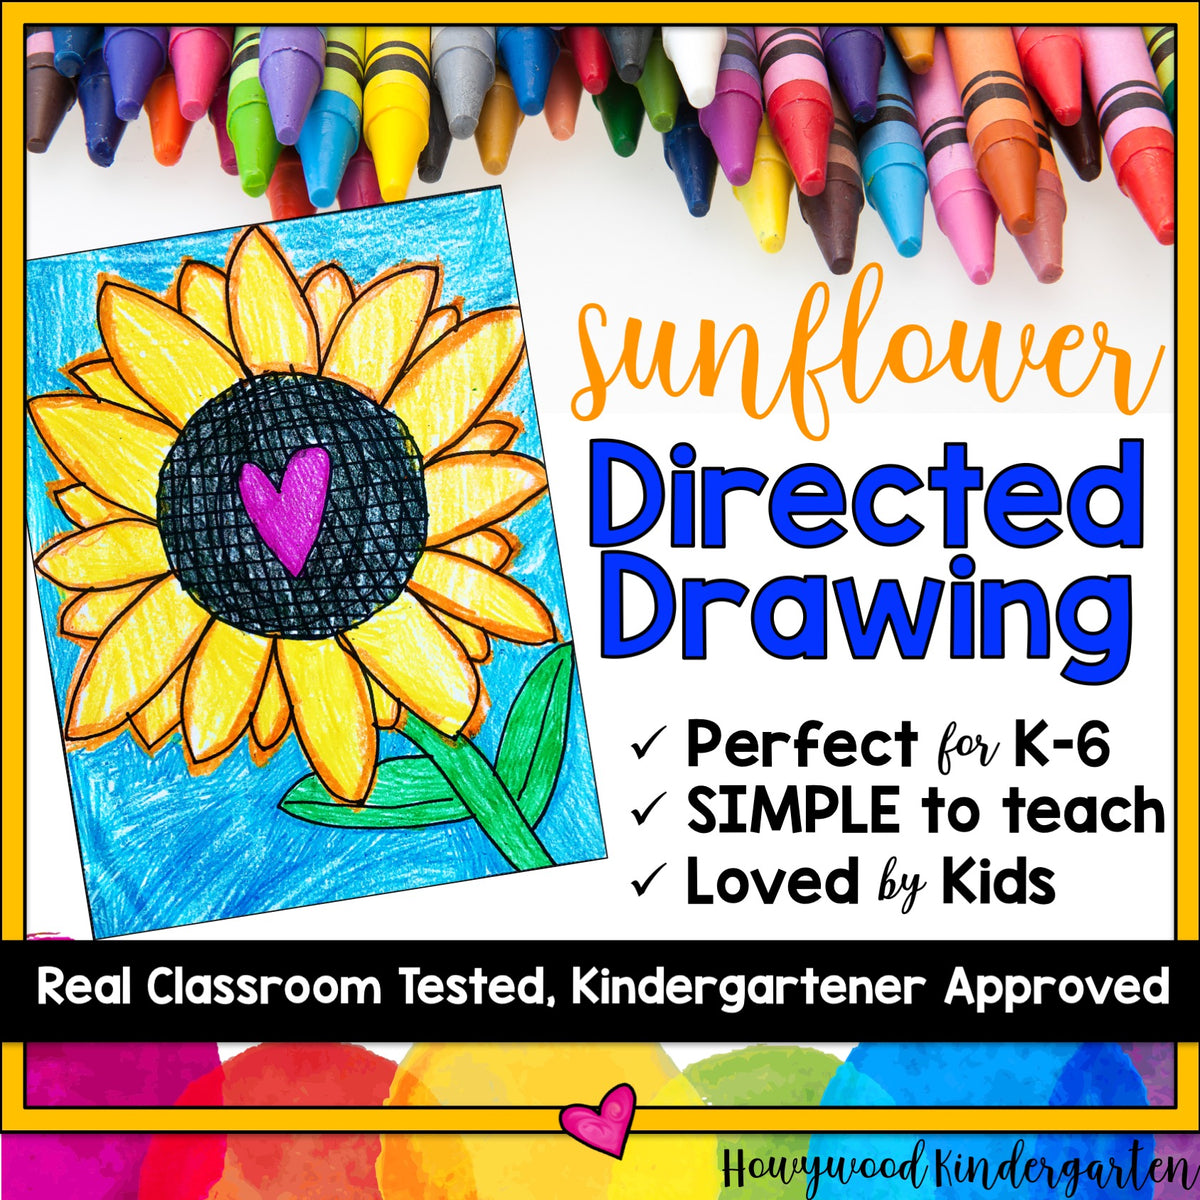 Sunflower Directed Drawing HOWYWOOD Kindergarten